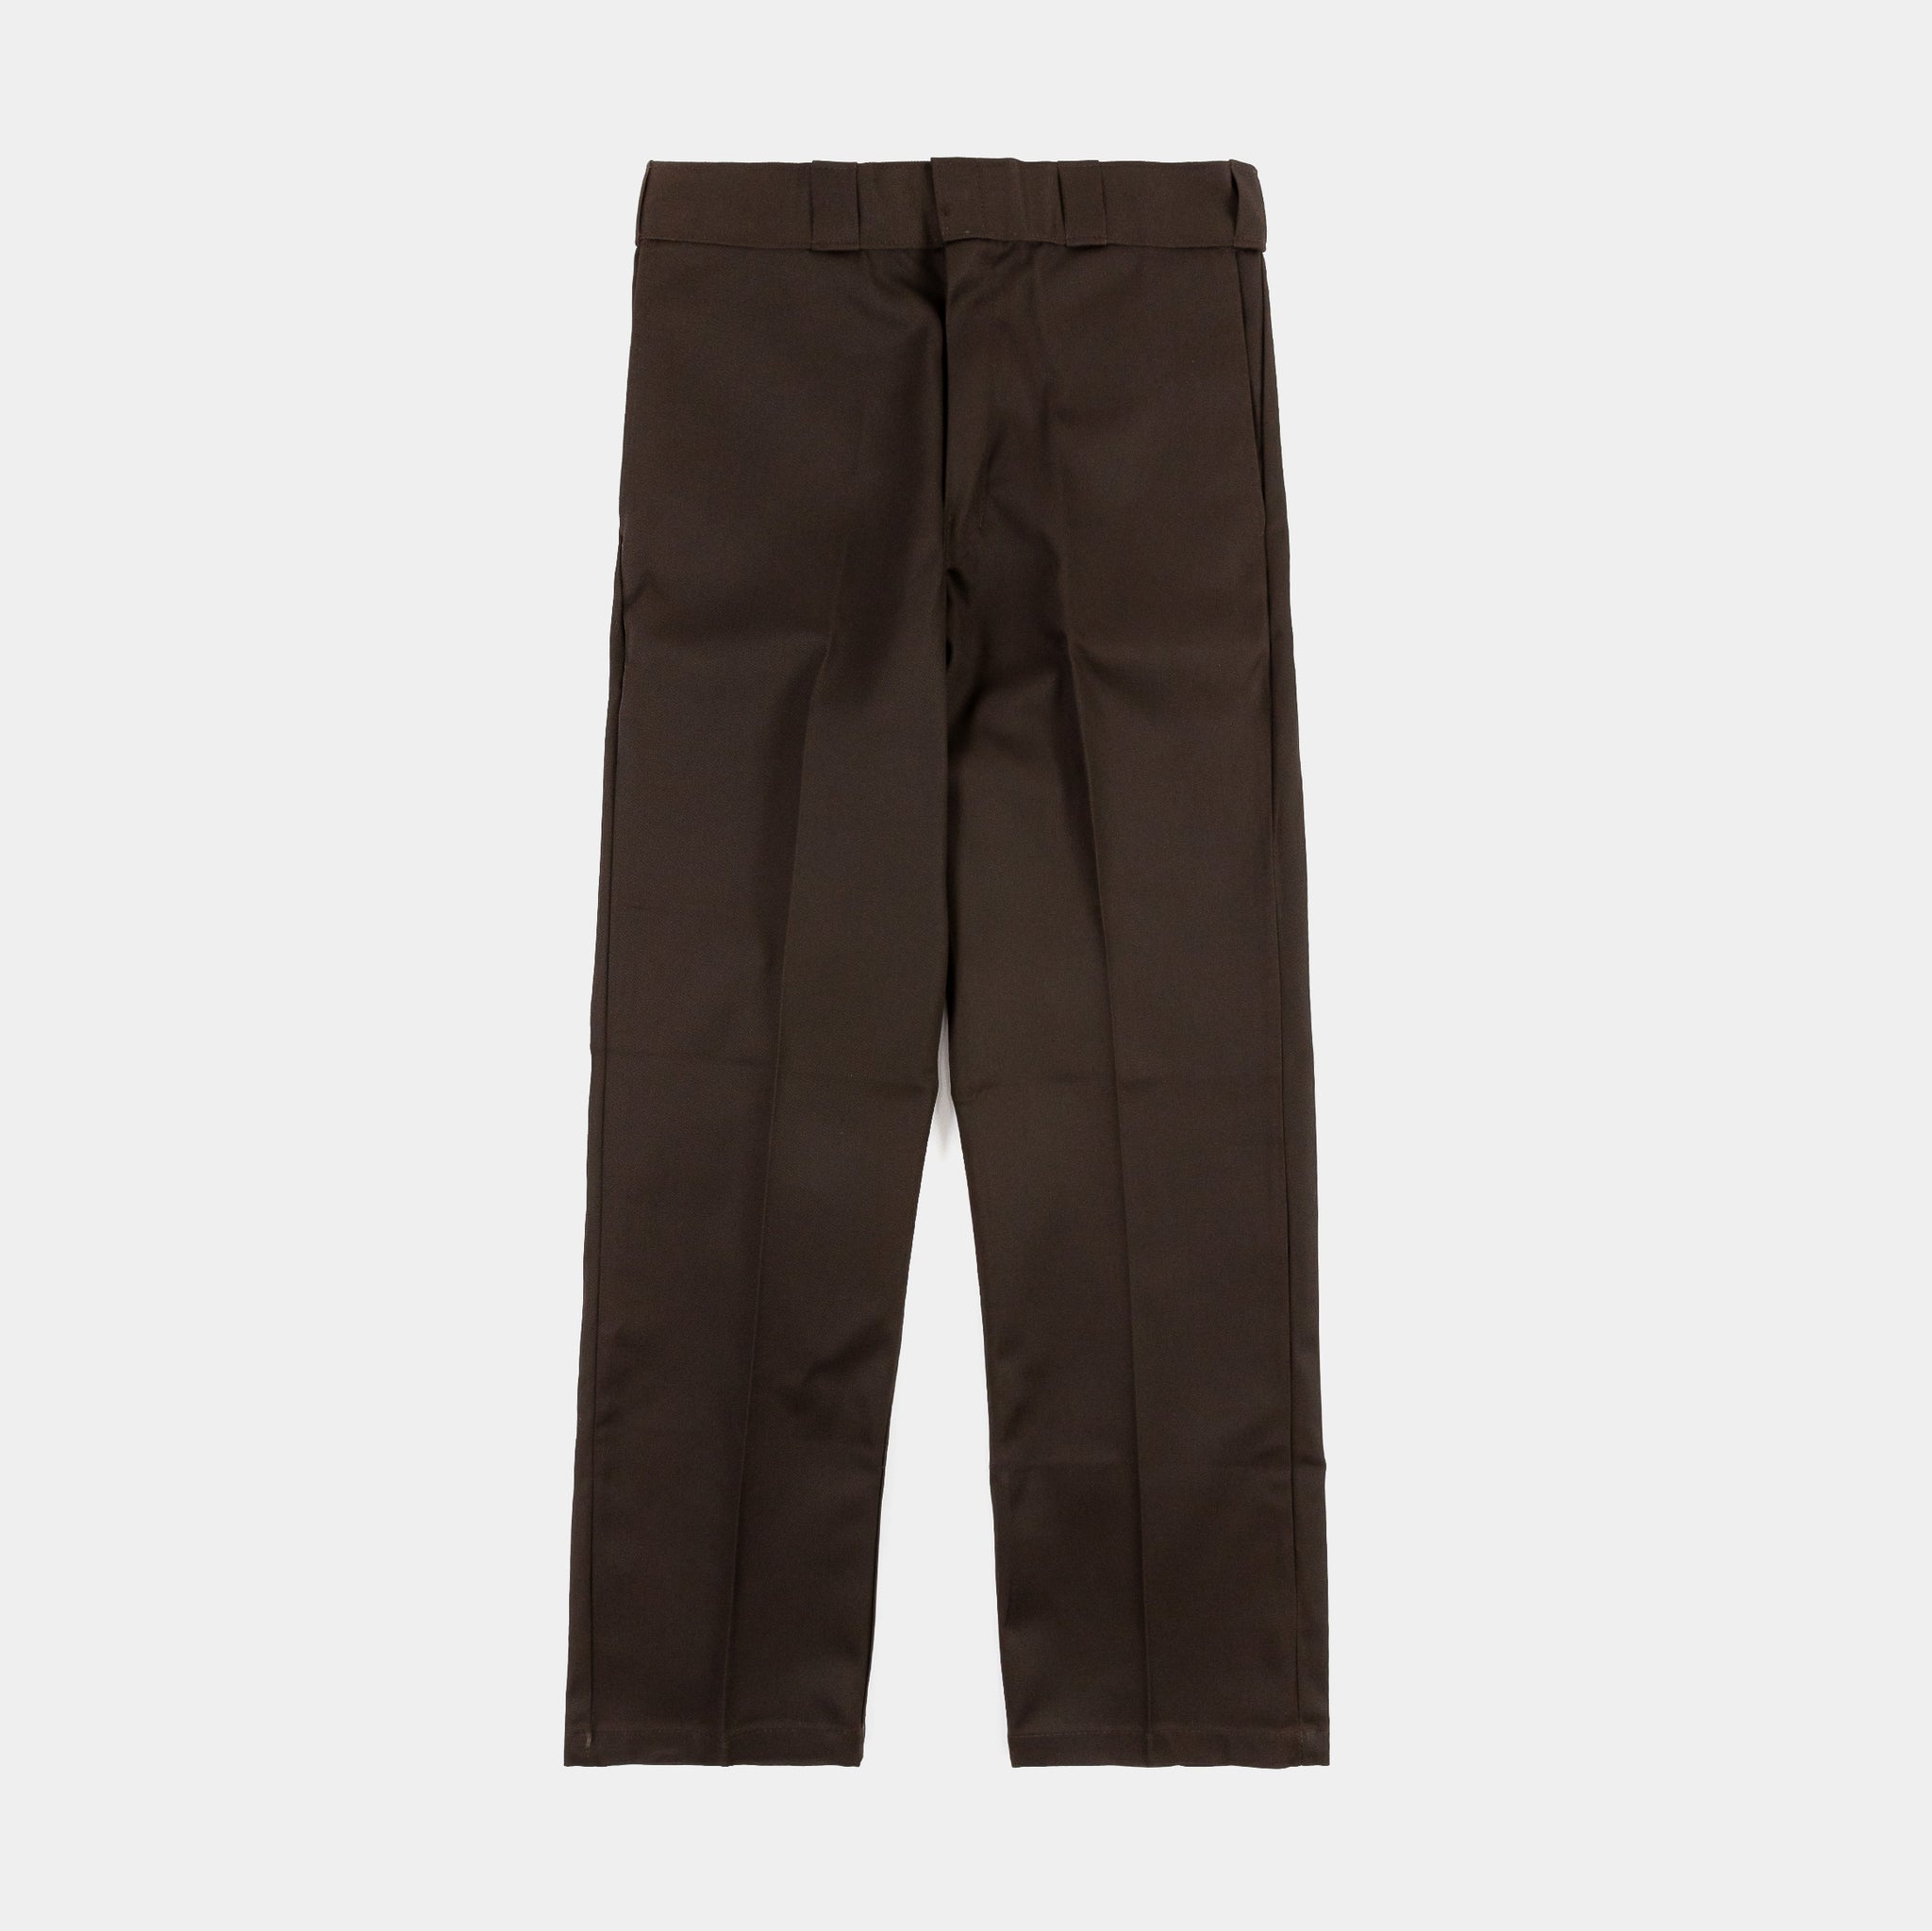 Original 874 Work Pant (Unisex) in Khaki, Trousers